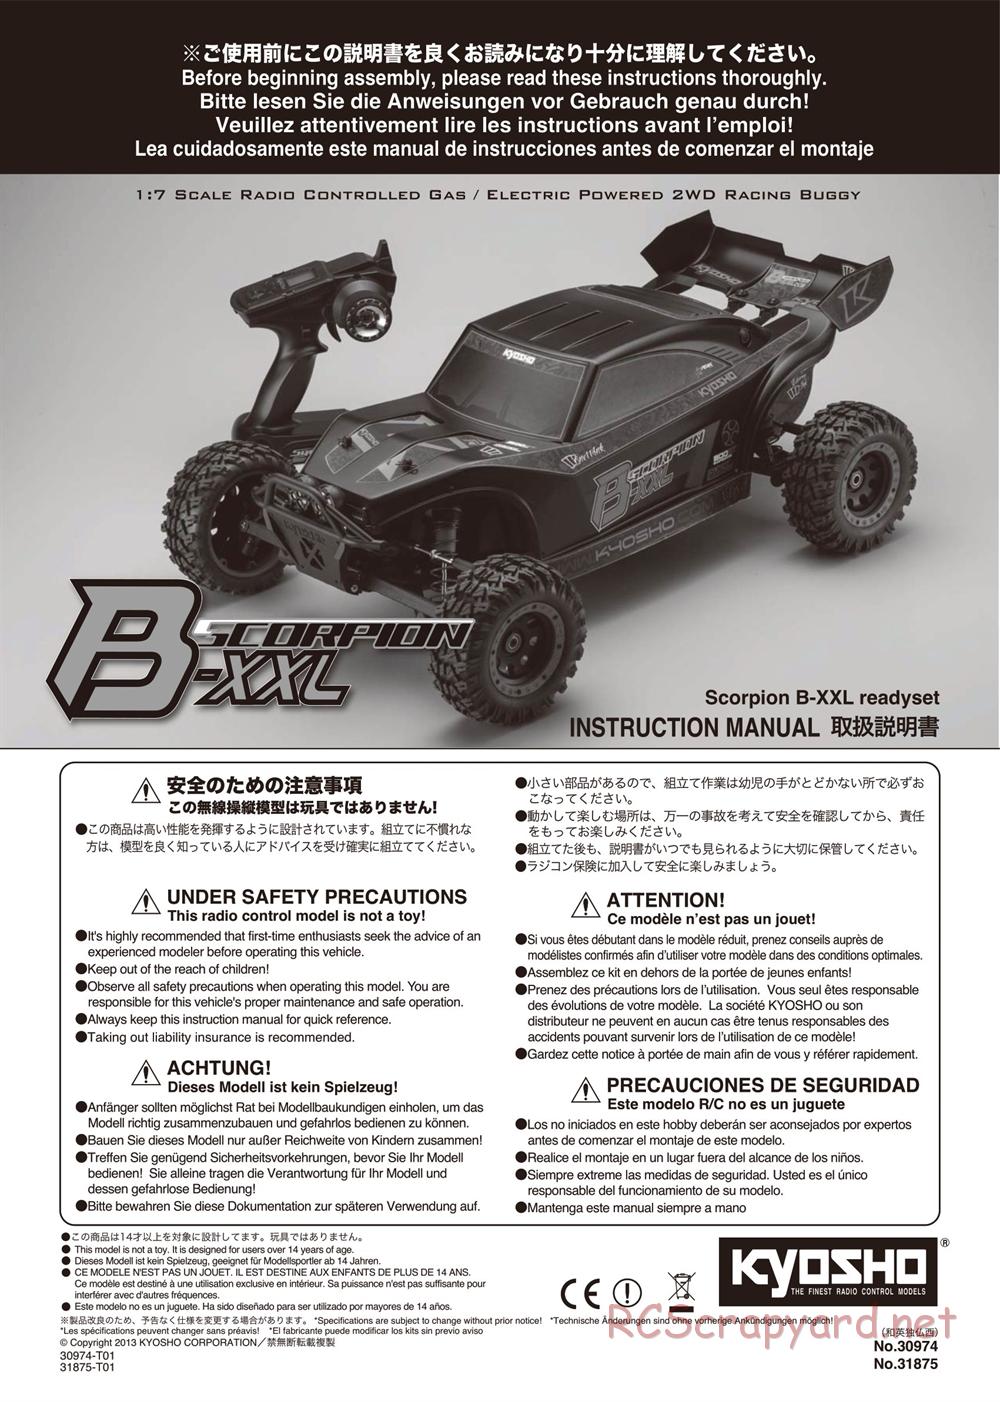 Kyosho - Scorpion B-XXL VE - Manual - Page 1